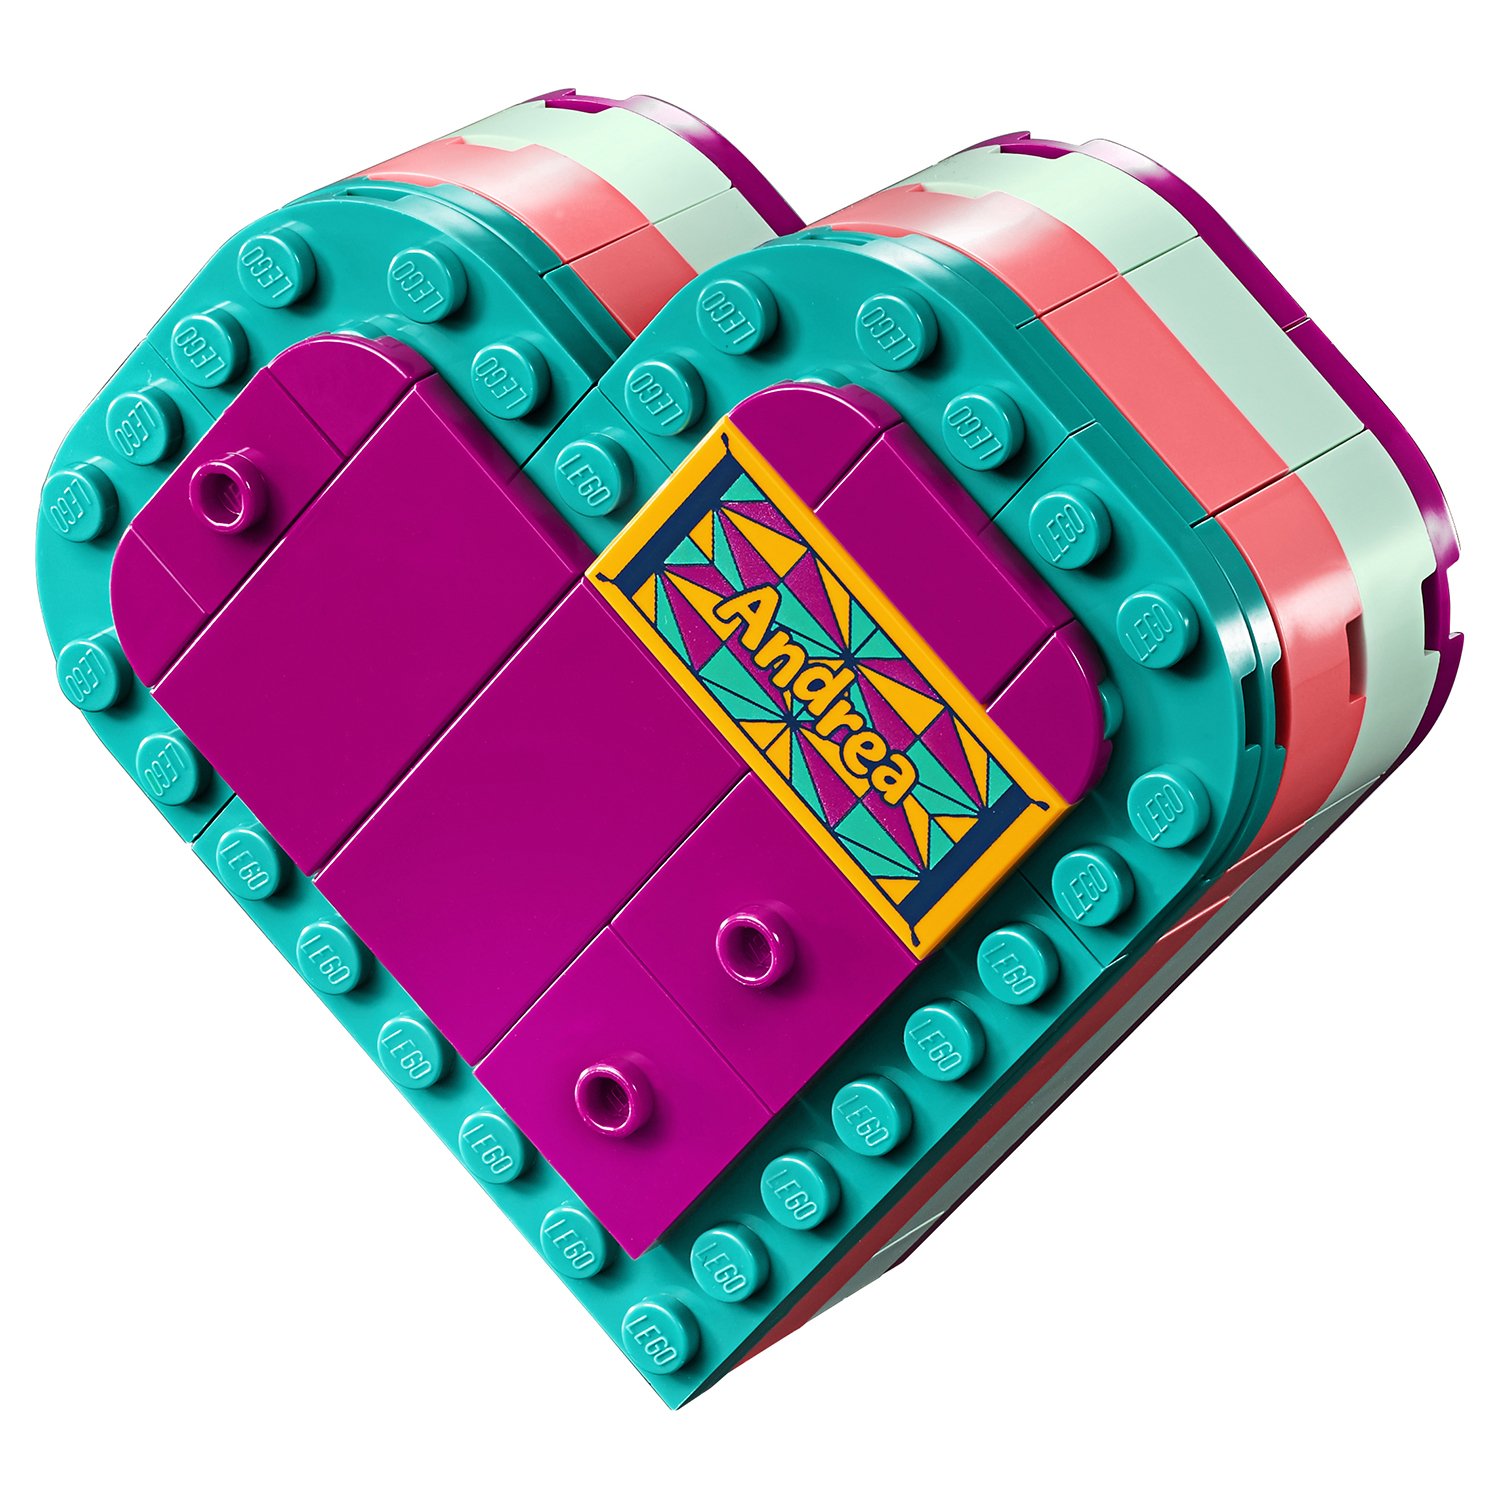 Lego Friends 41384 Летняя шкатулка-сердечко для Андреа